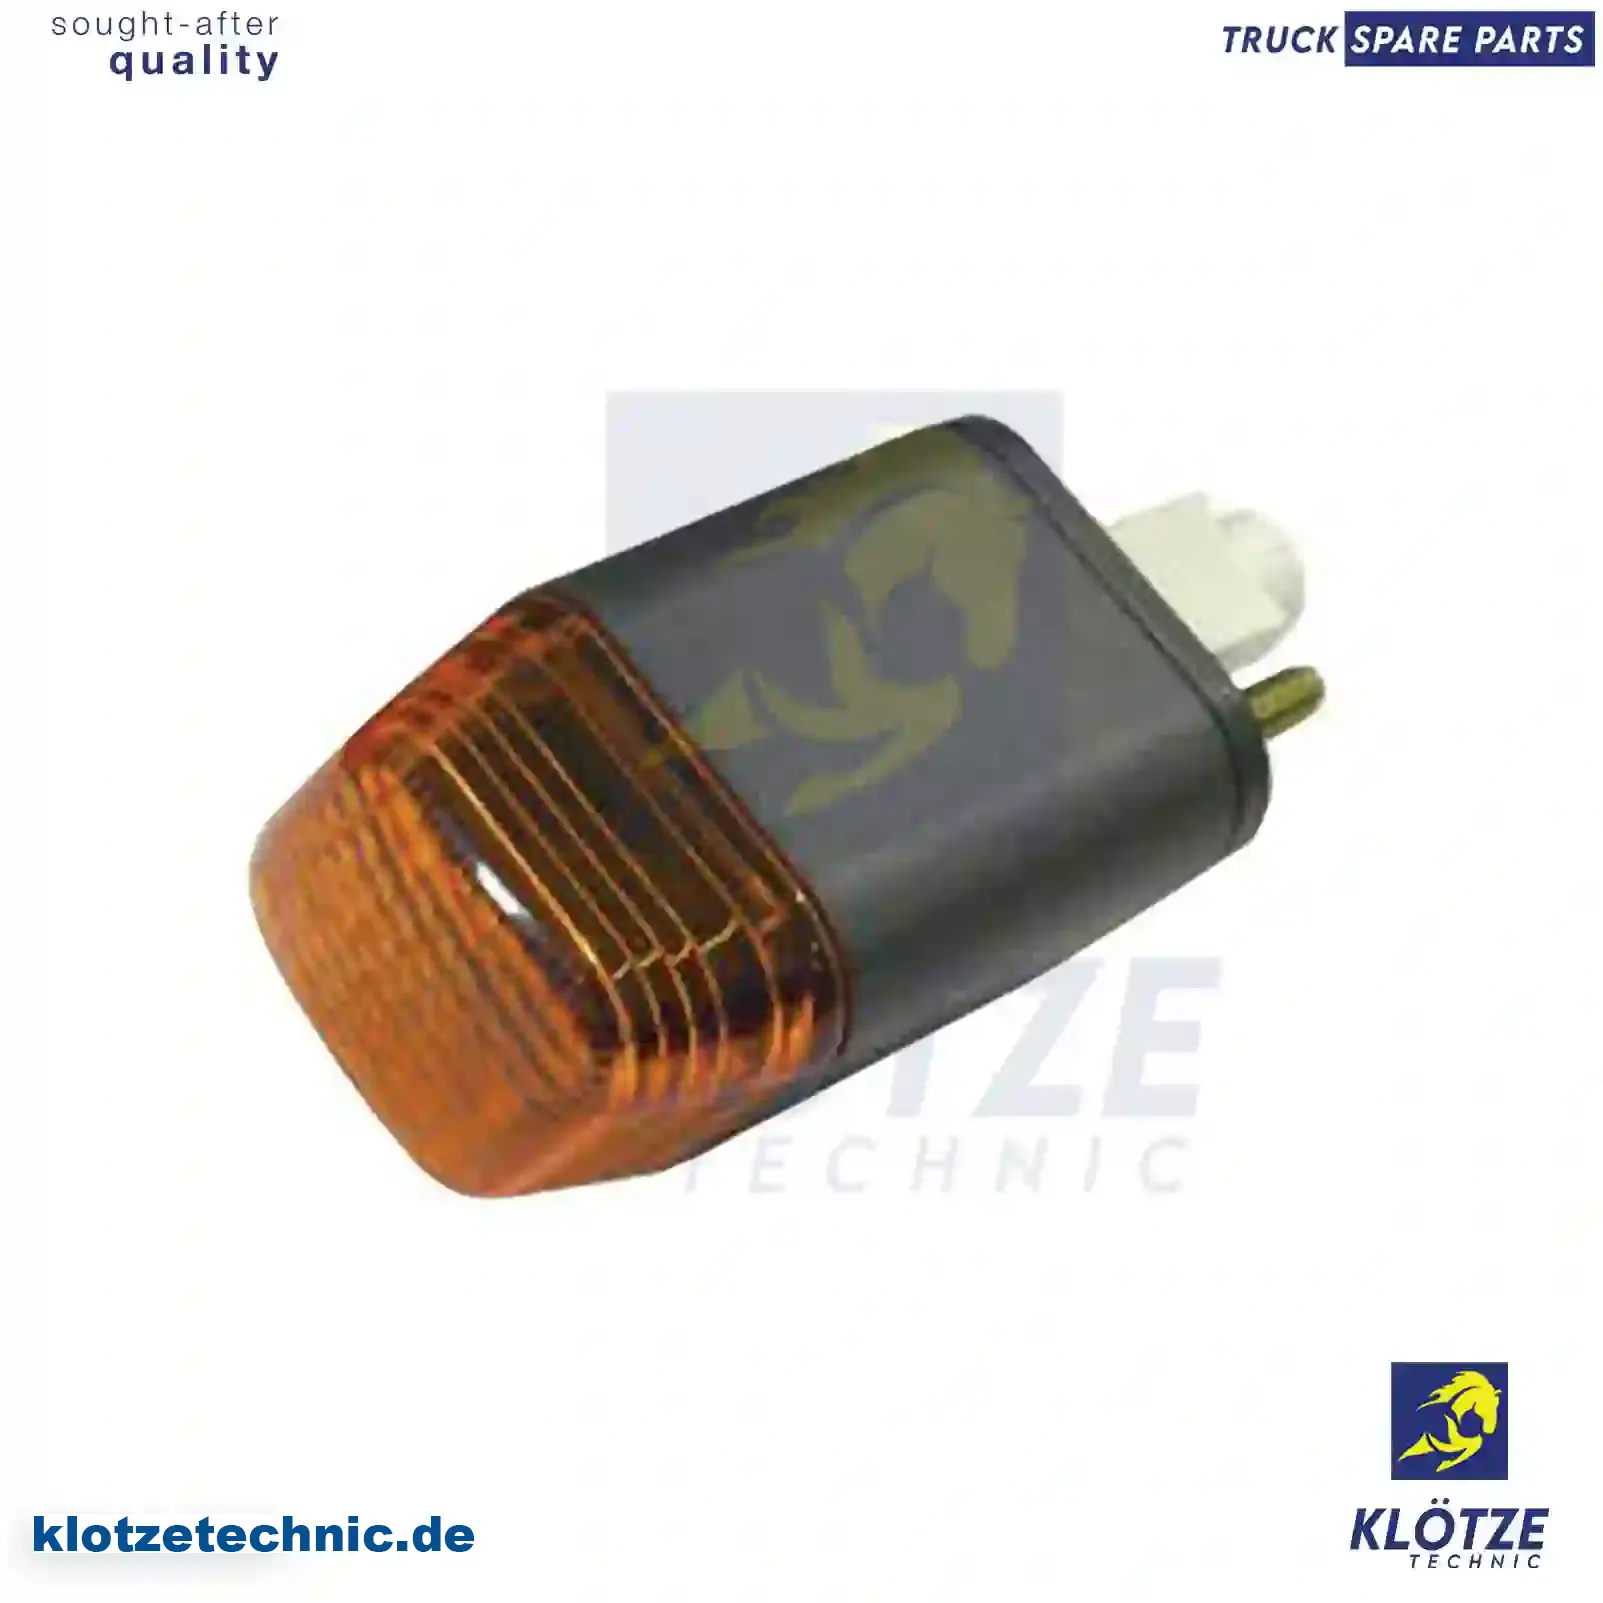 Side marking lamp, 500367924, 500367 || Klötze Technic